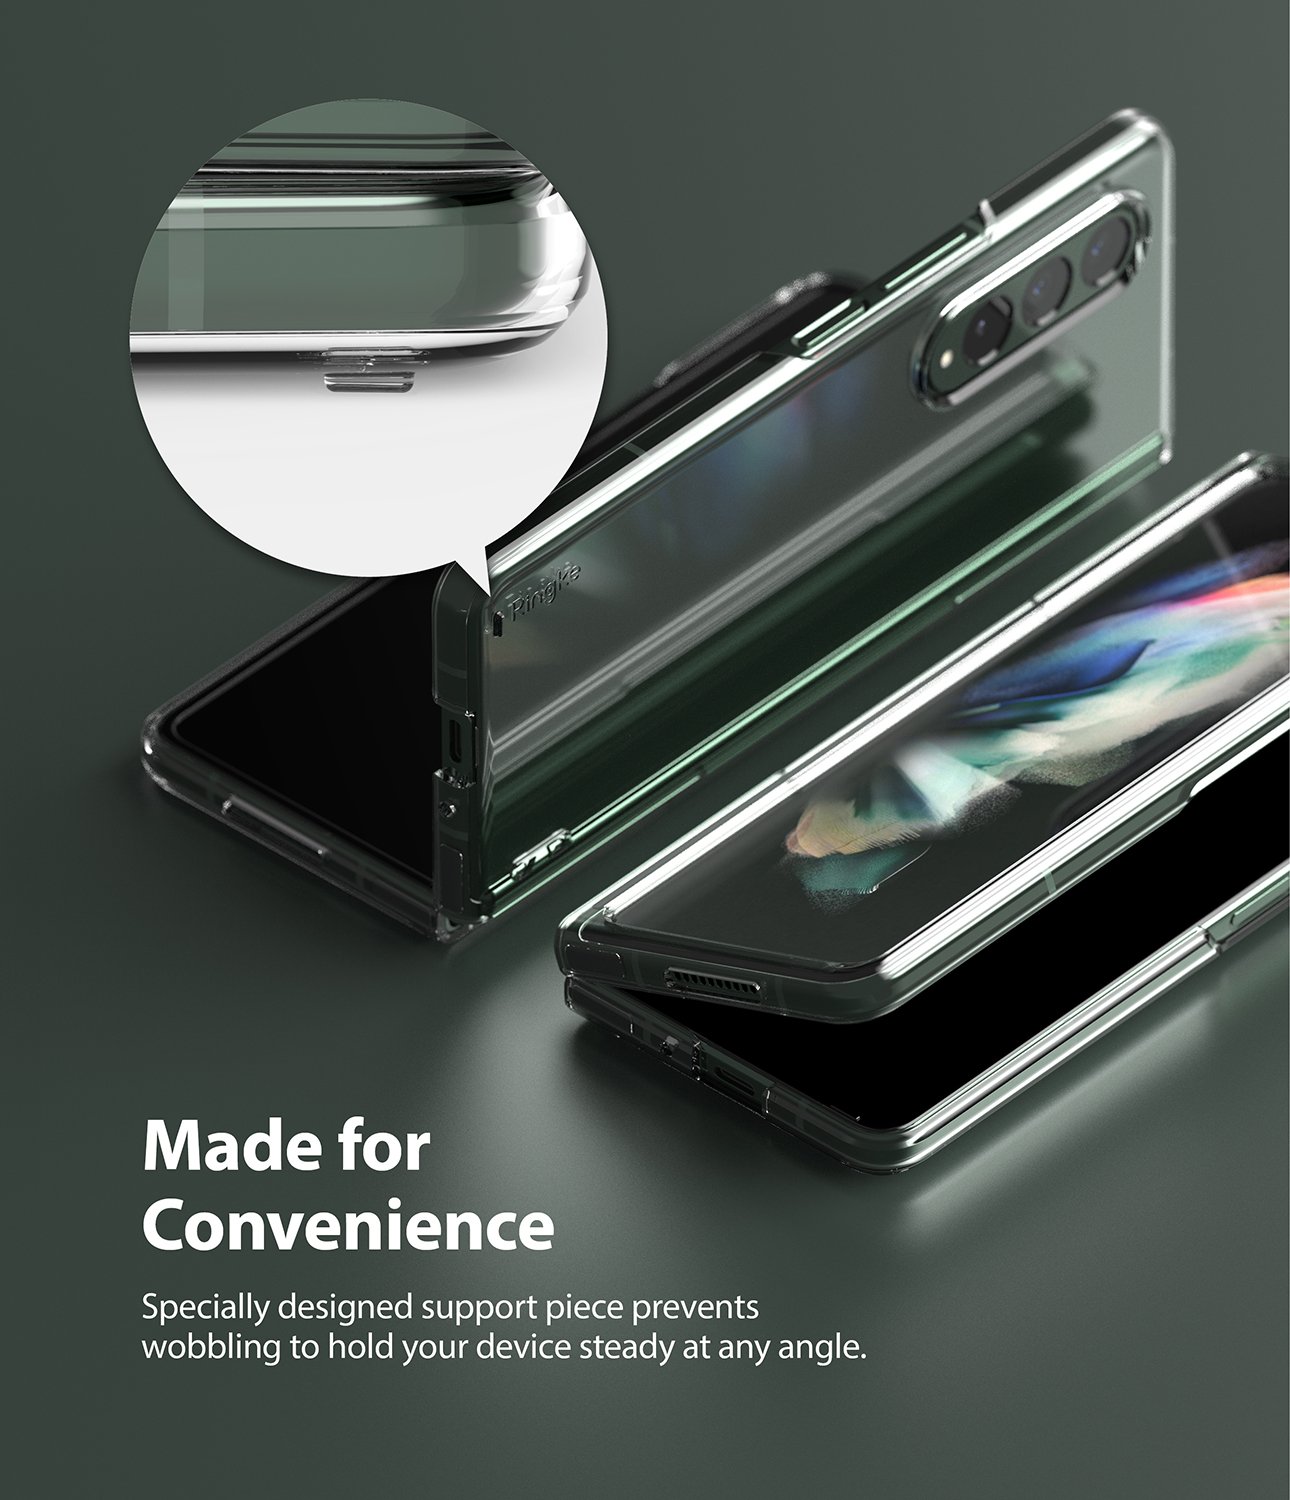 Slim Case Galaxy Z Fold 3 Black